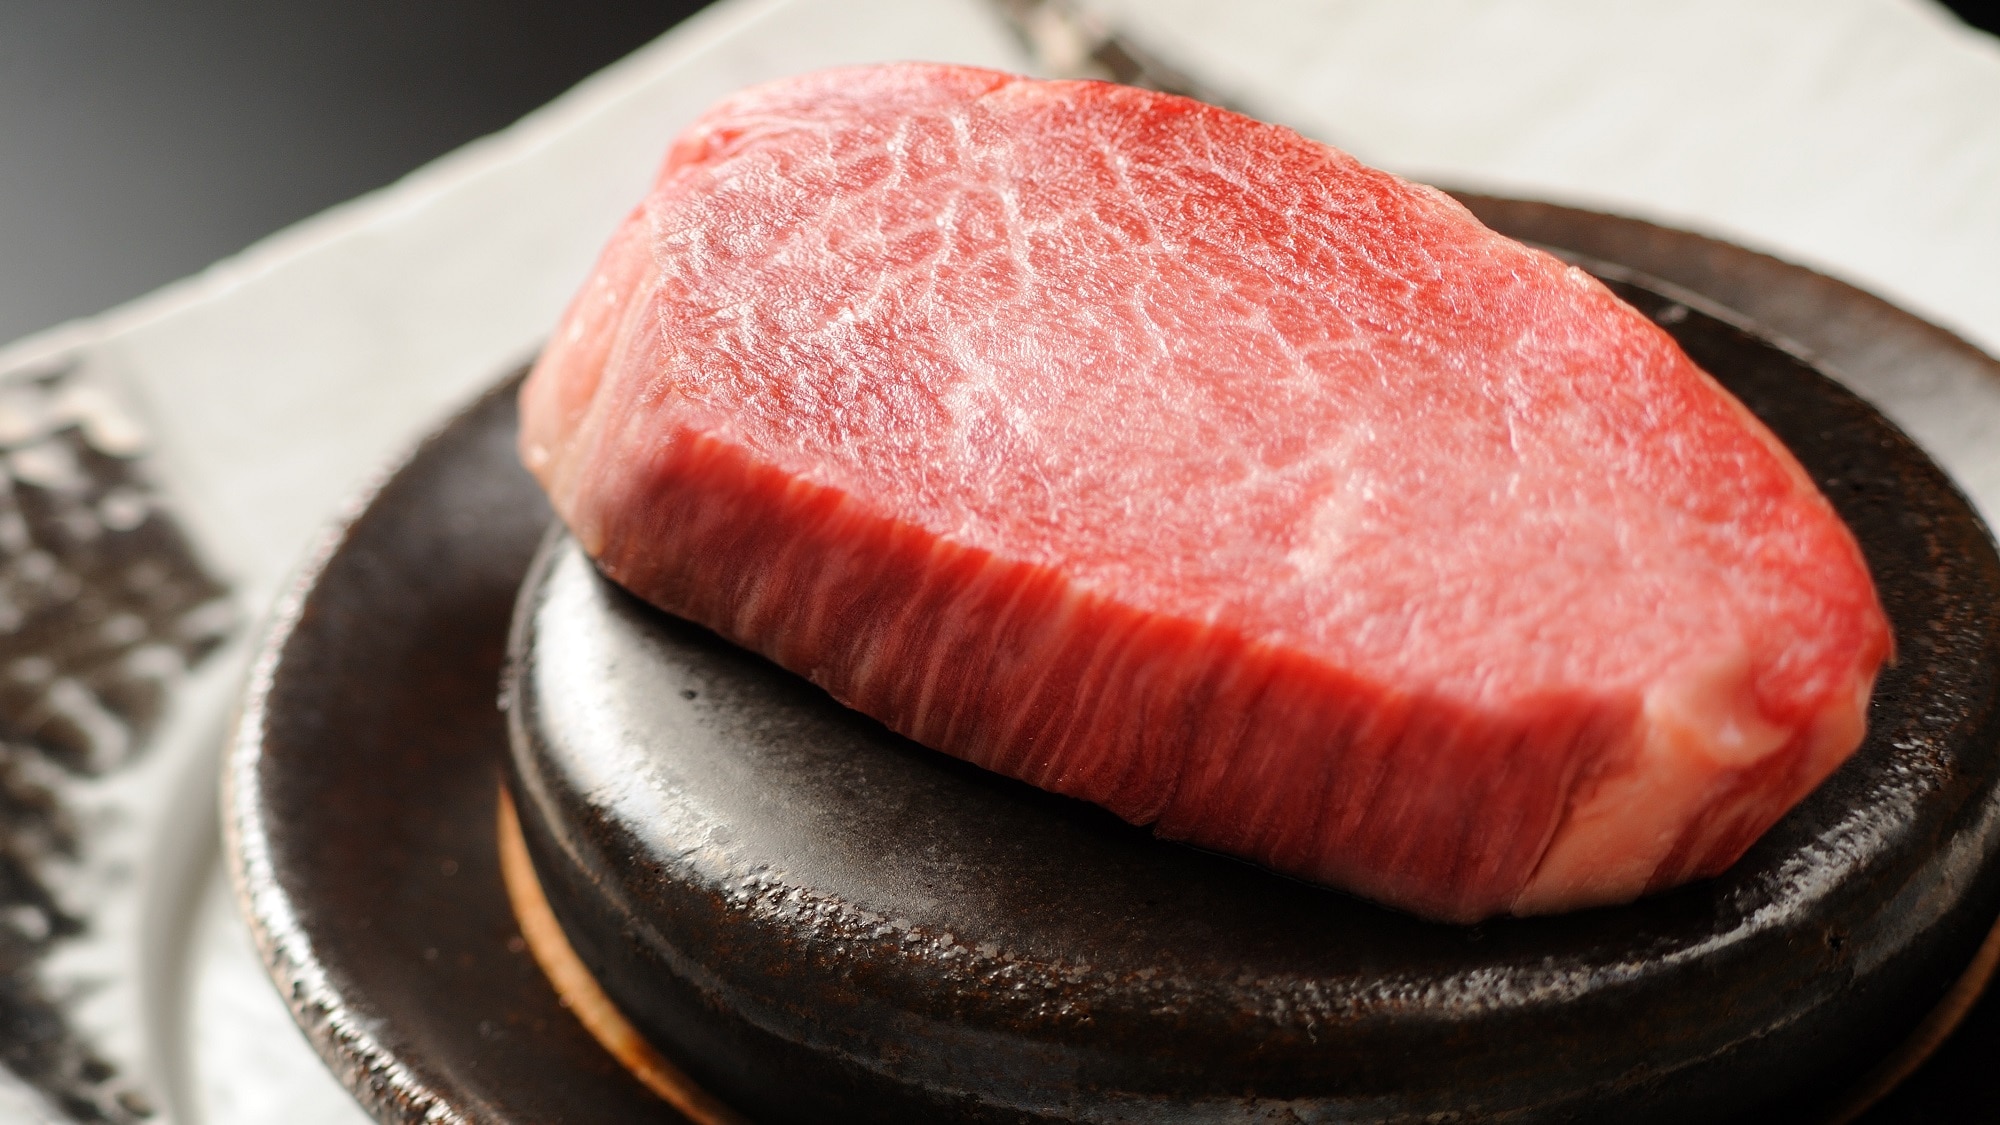 Main example of dinner: Maesawa beef fillet steak